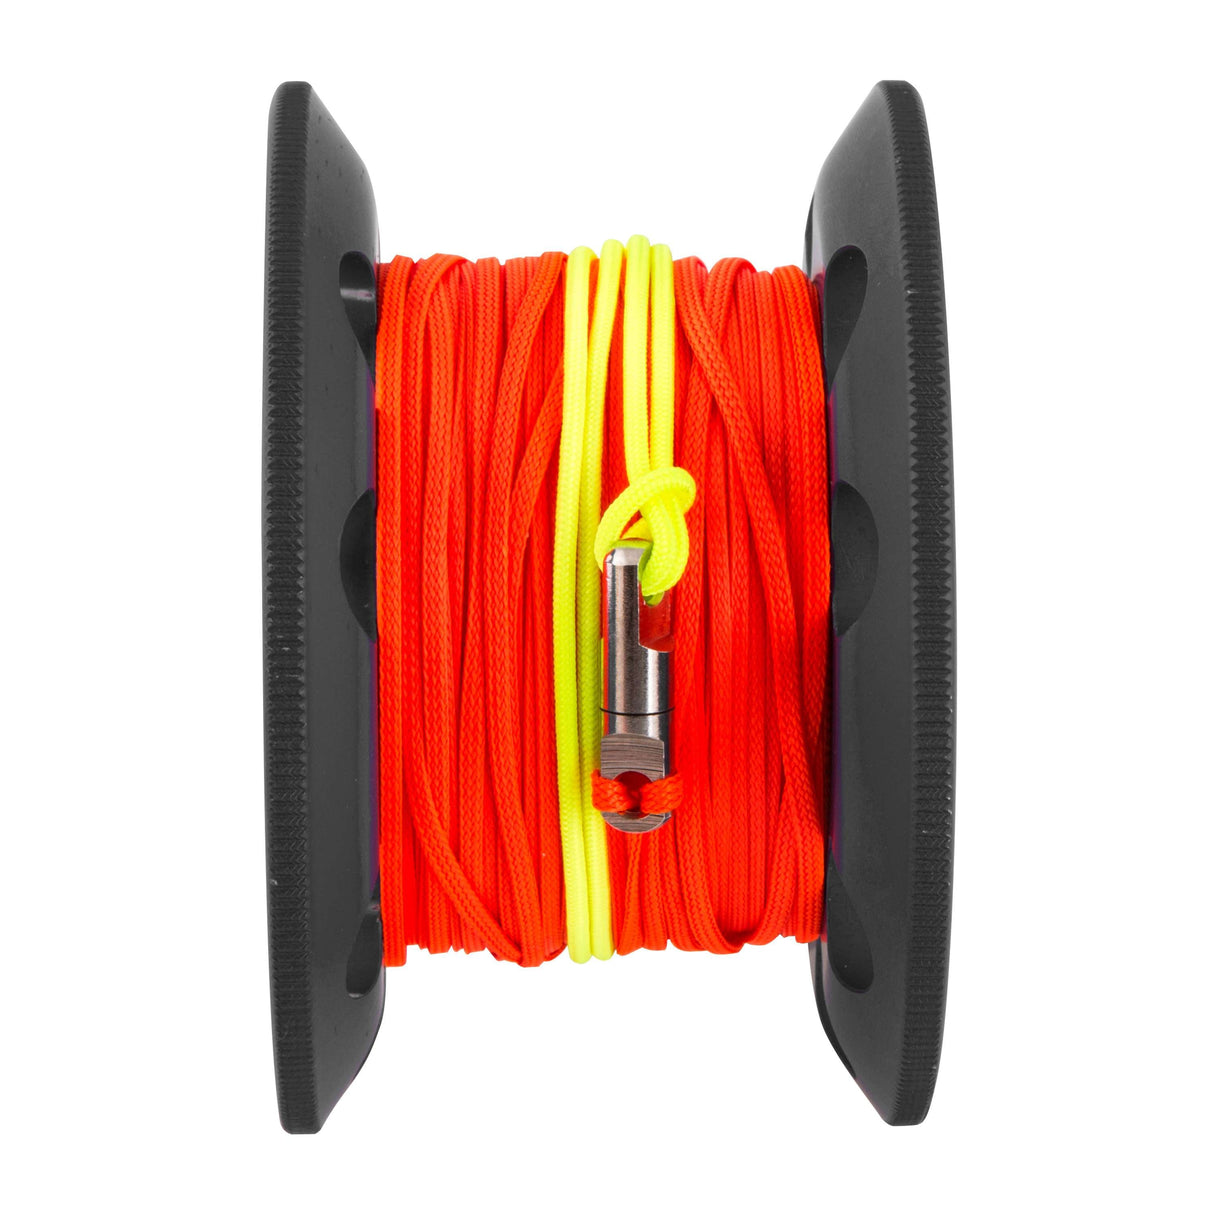 Apeks 60m Lifeline Spool Grey/Bright Orange